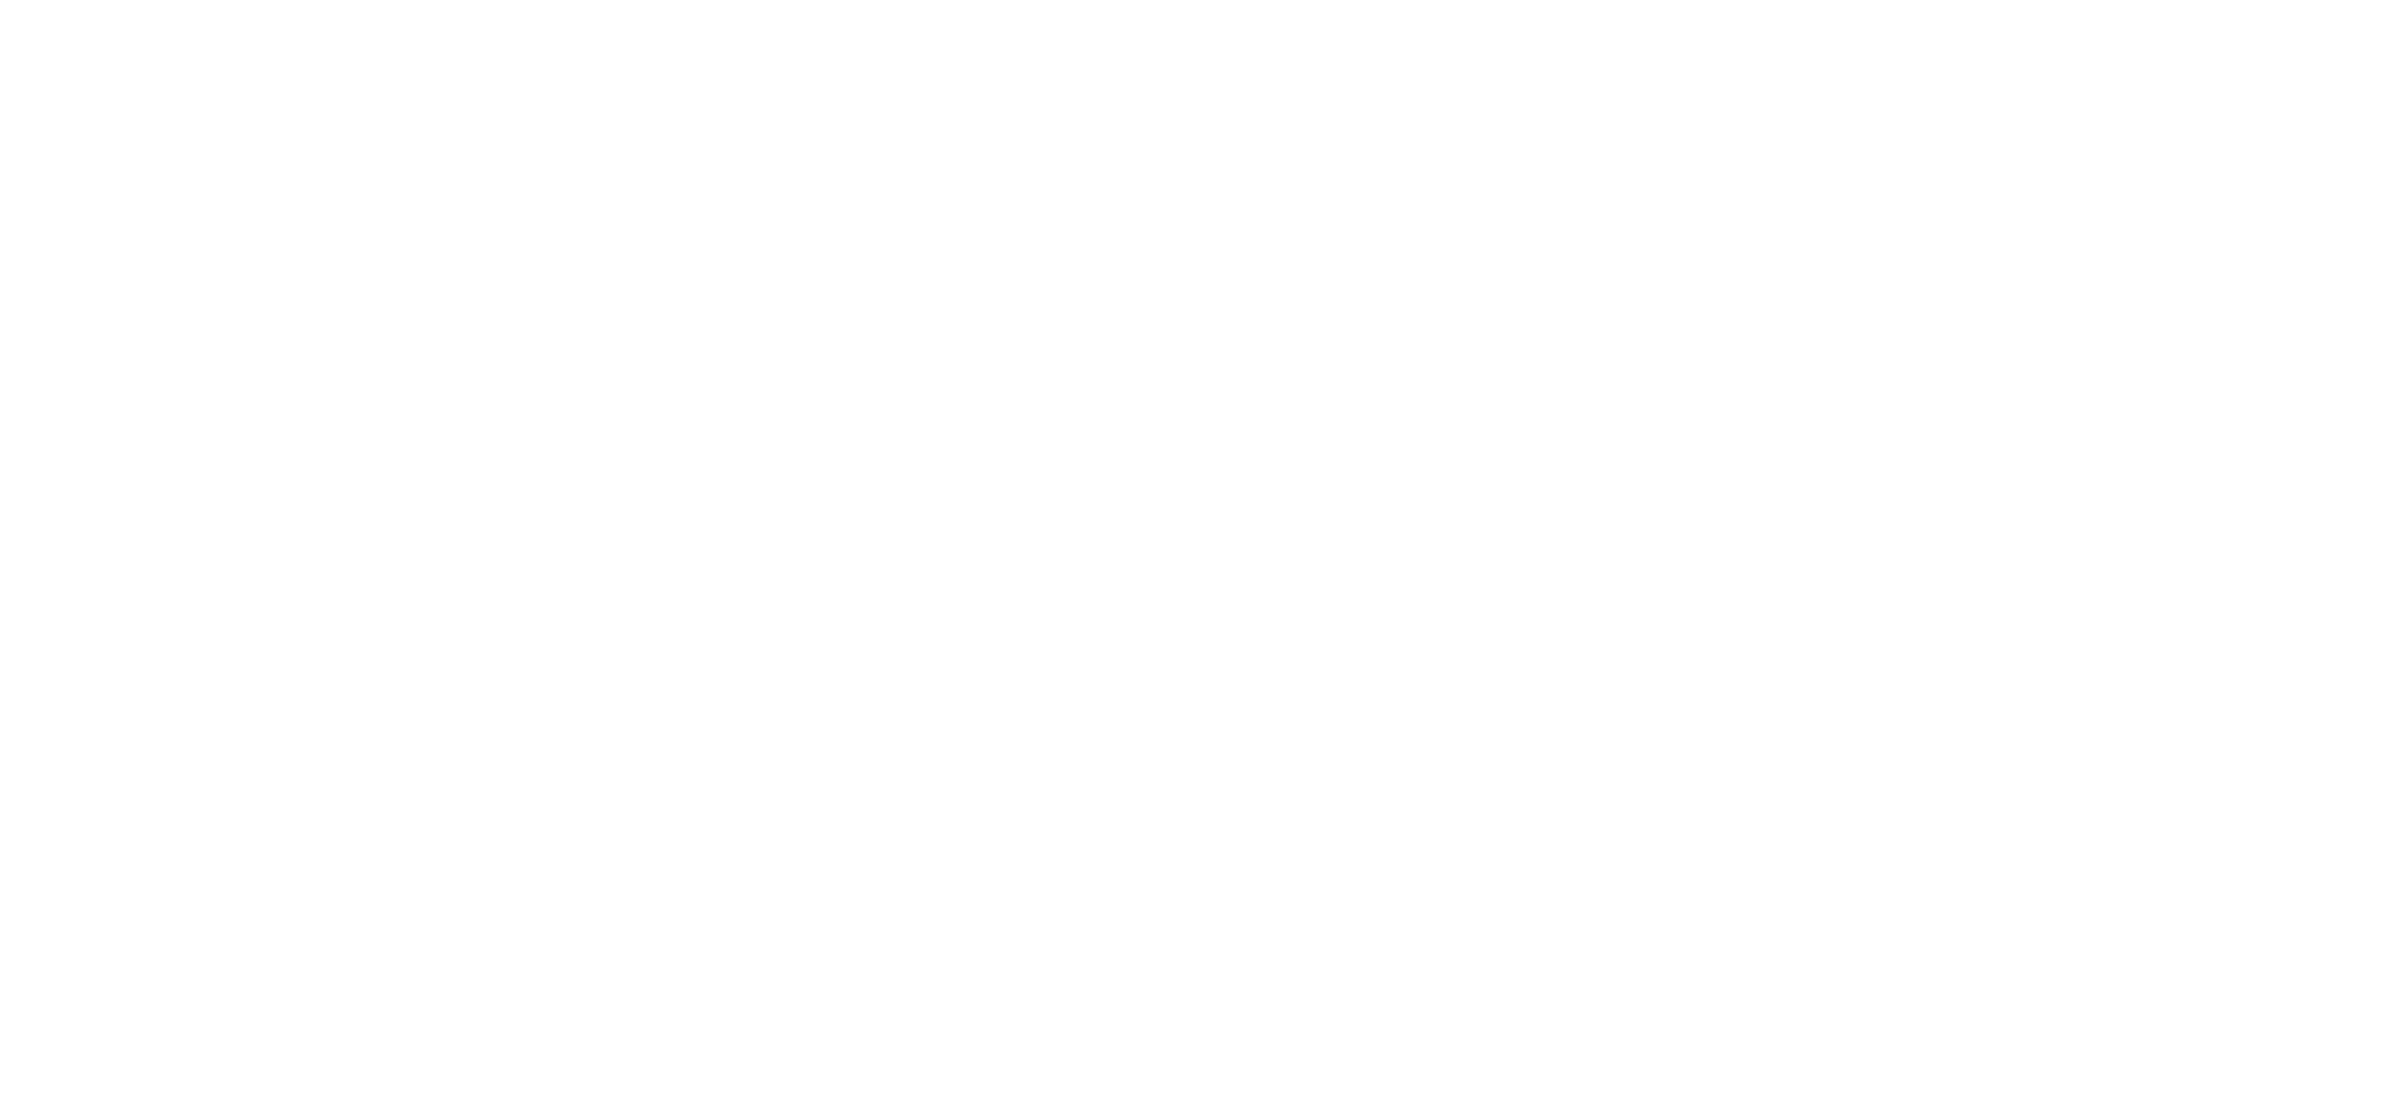 North Texas Auto Show